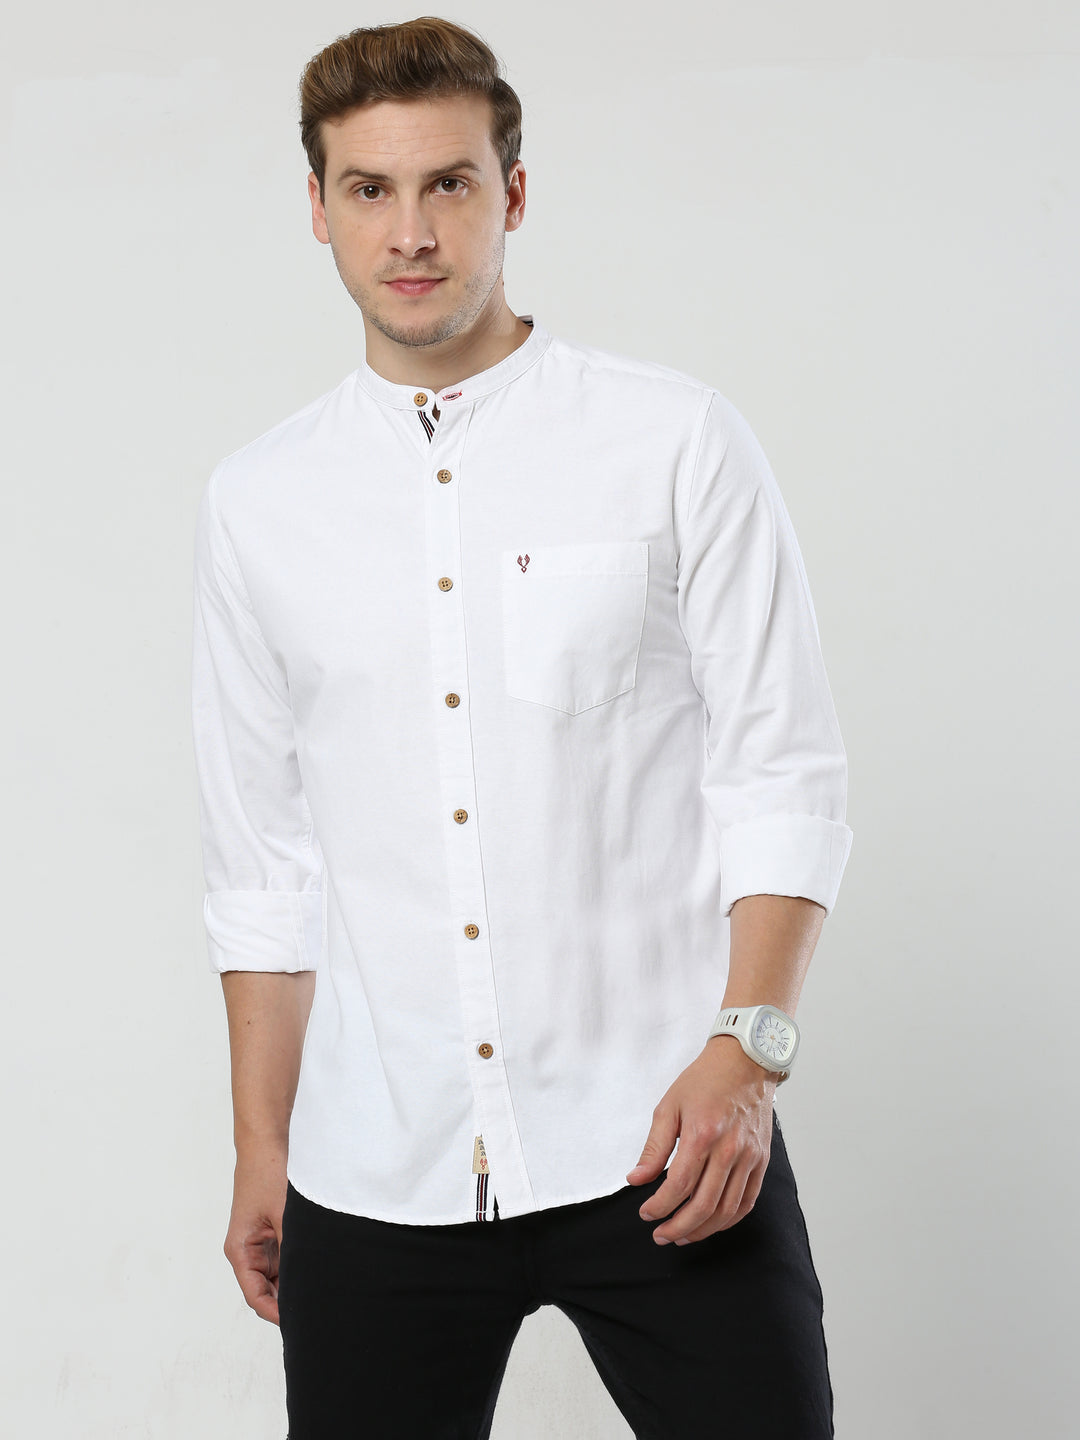 Jute Cotton White Shirt